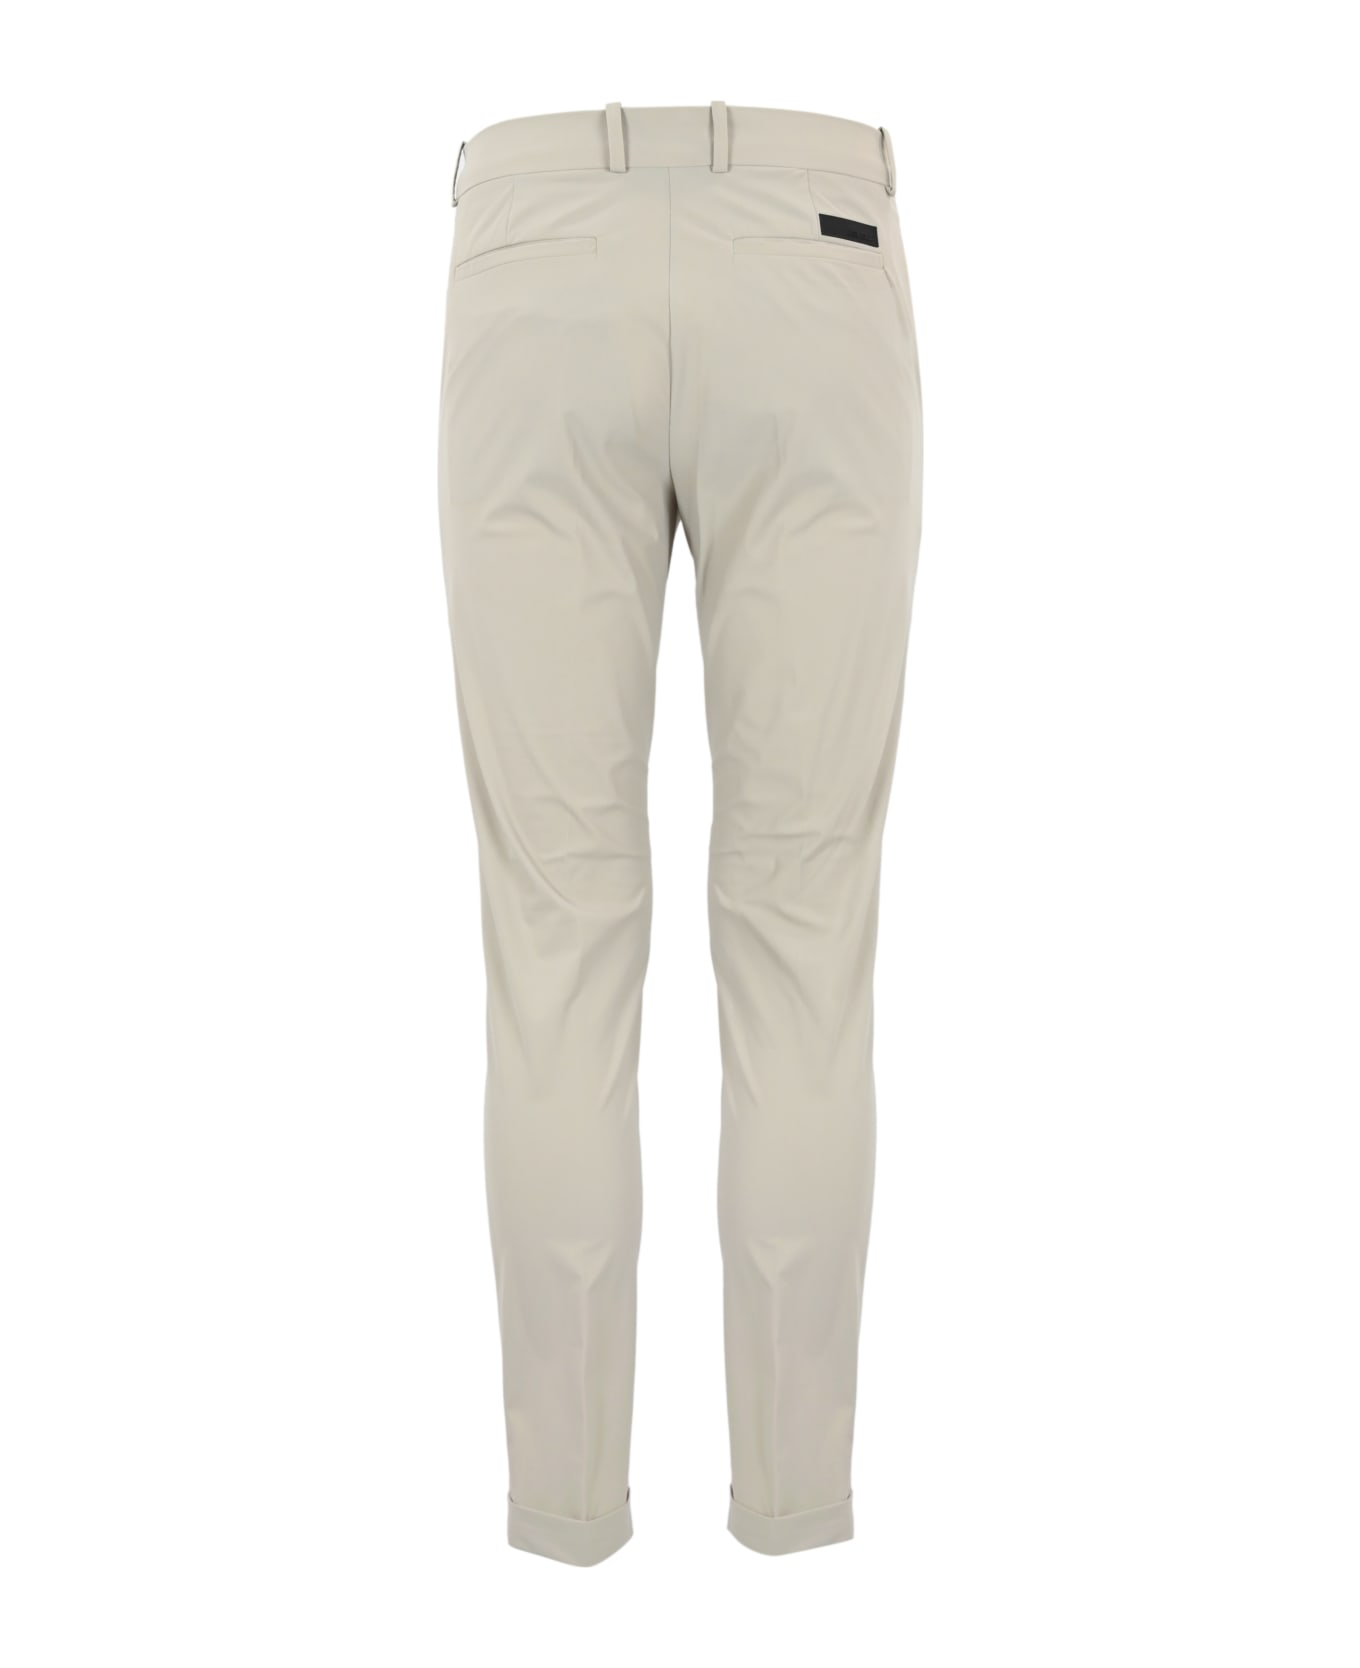 RRD - Roberto Ricci Design Chino Trousers In Technical Fabric - White sand ボトムス